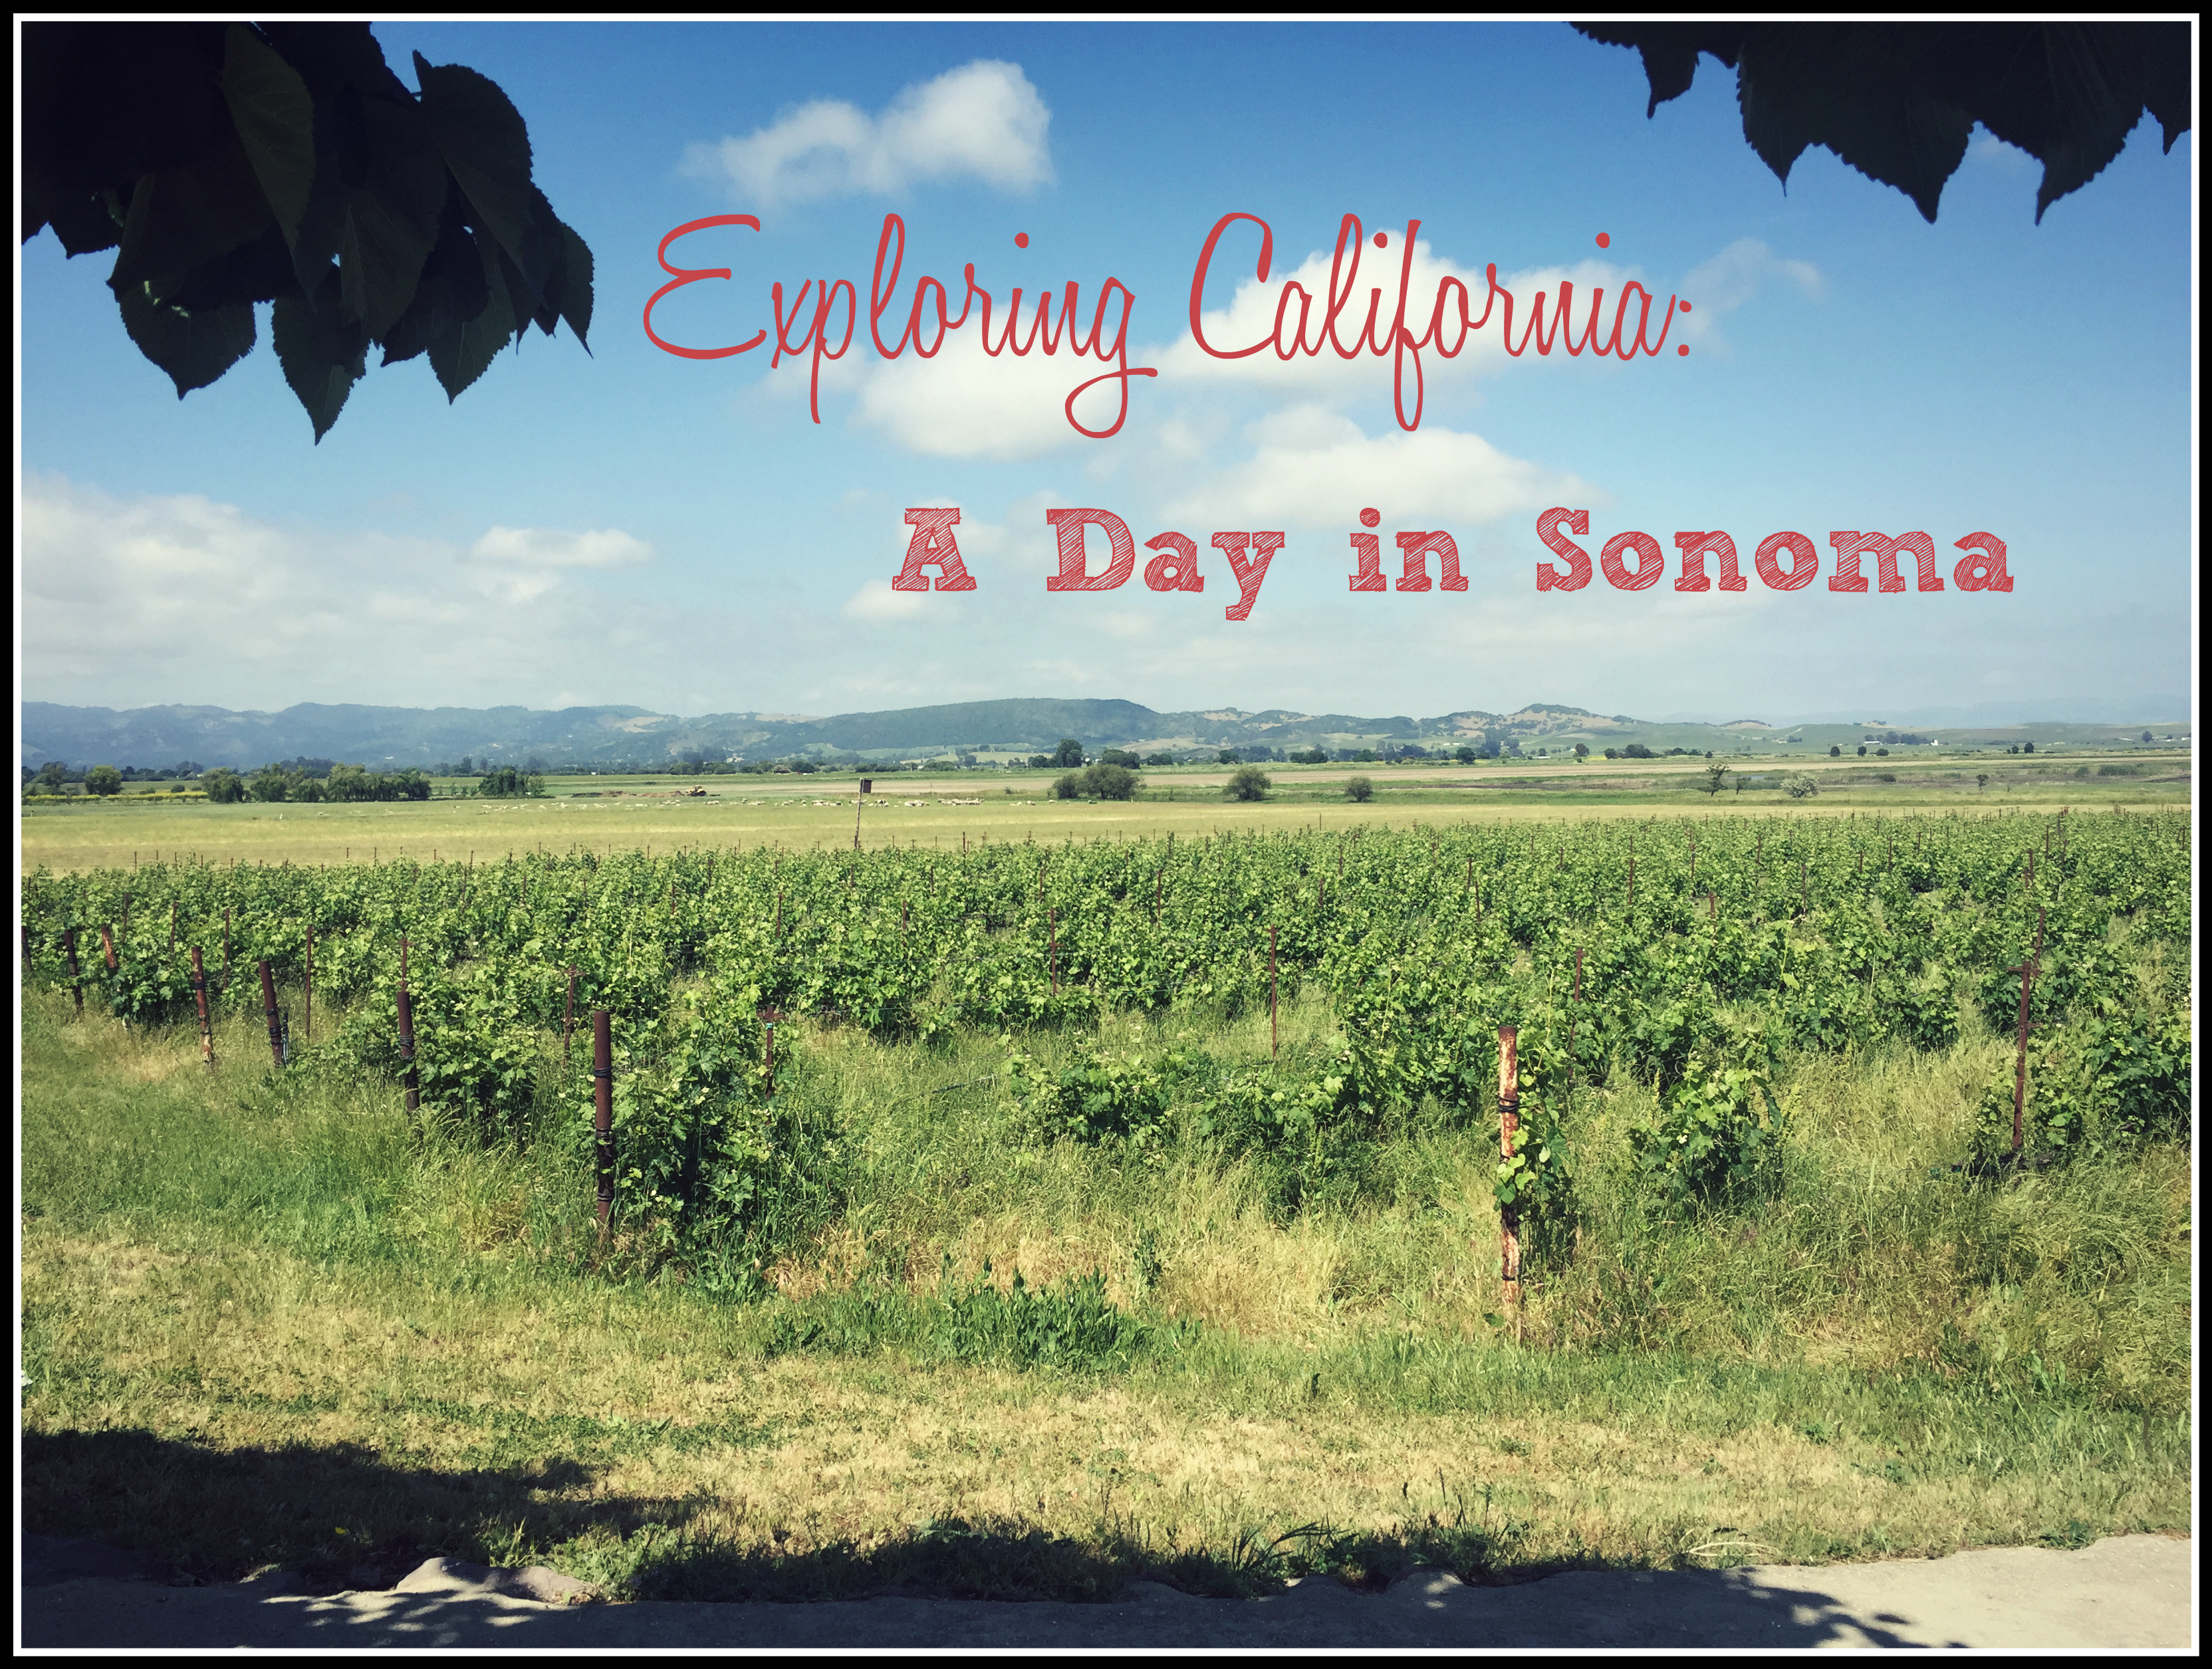 sonoma county pics, sonoma wineries, jacuzzi winery, wineries sonoma valley, wineries in sonoma, what to do in sonoma, travel pics sonoma, travel blogger pics, travel blog, top travel blog, top lifestyle blogs